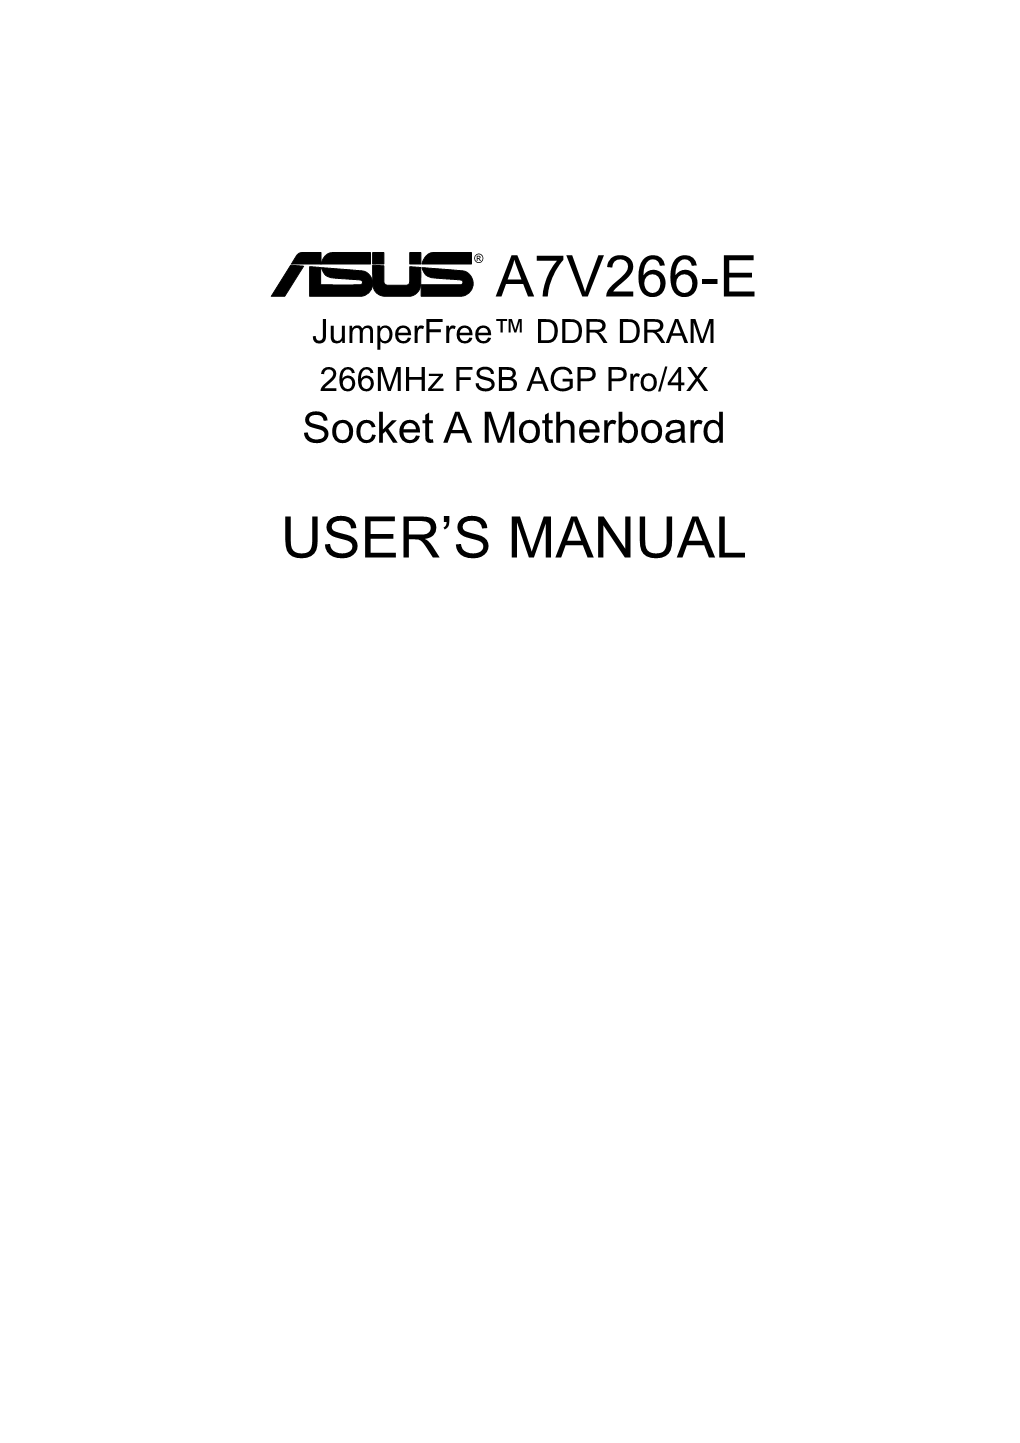 ® A7v266-E User's Manual